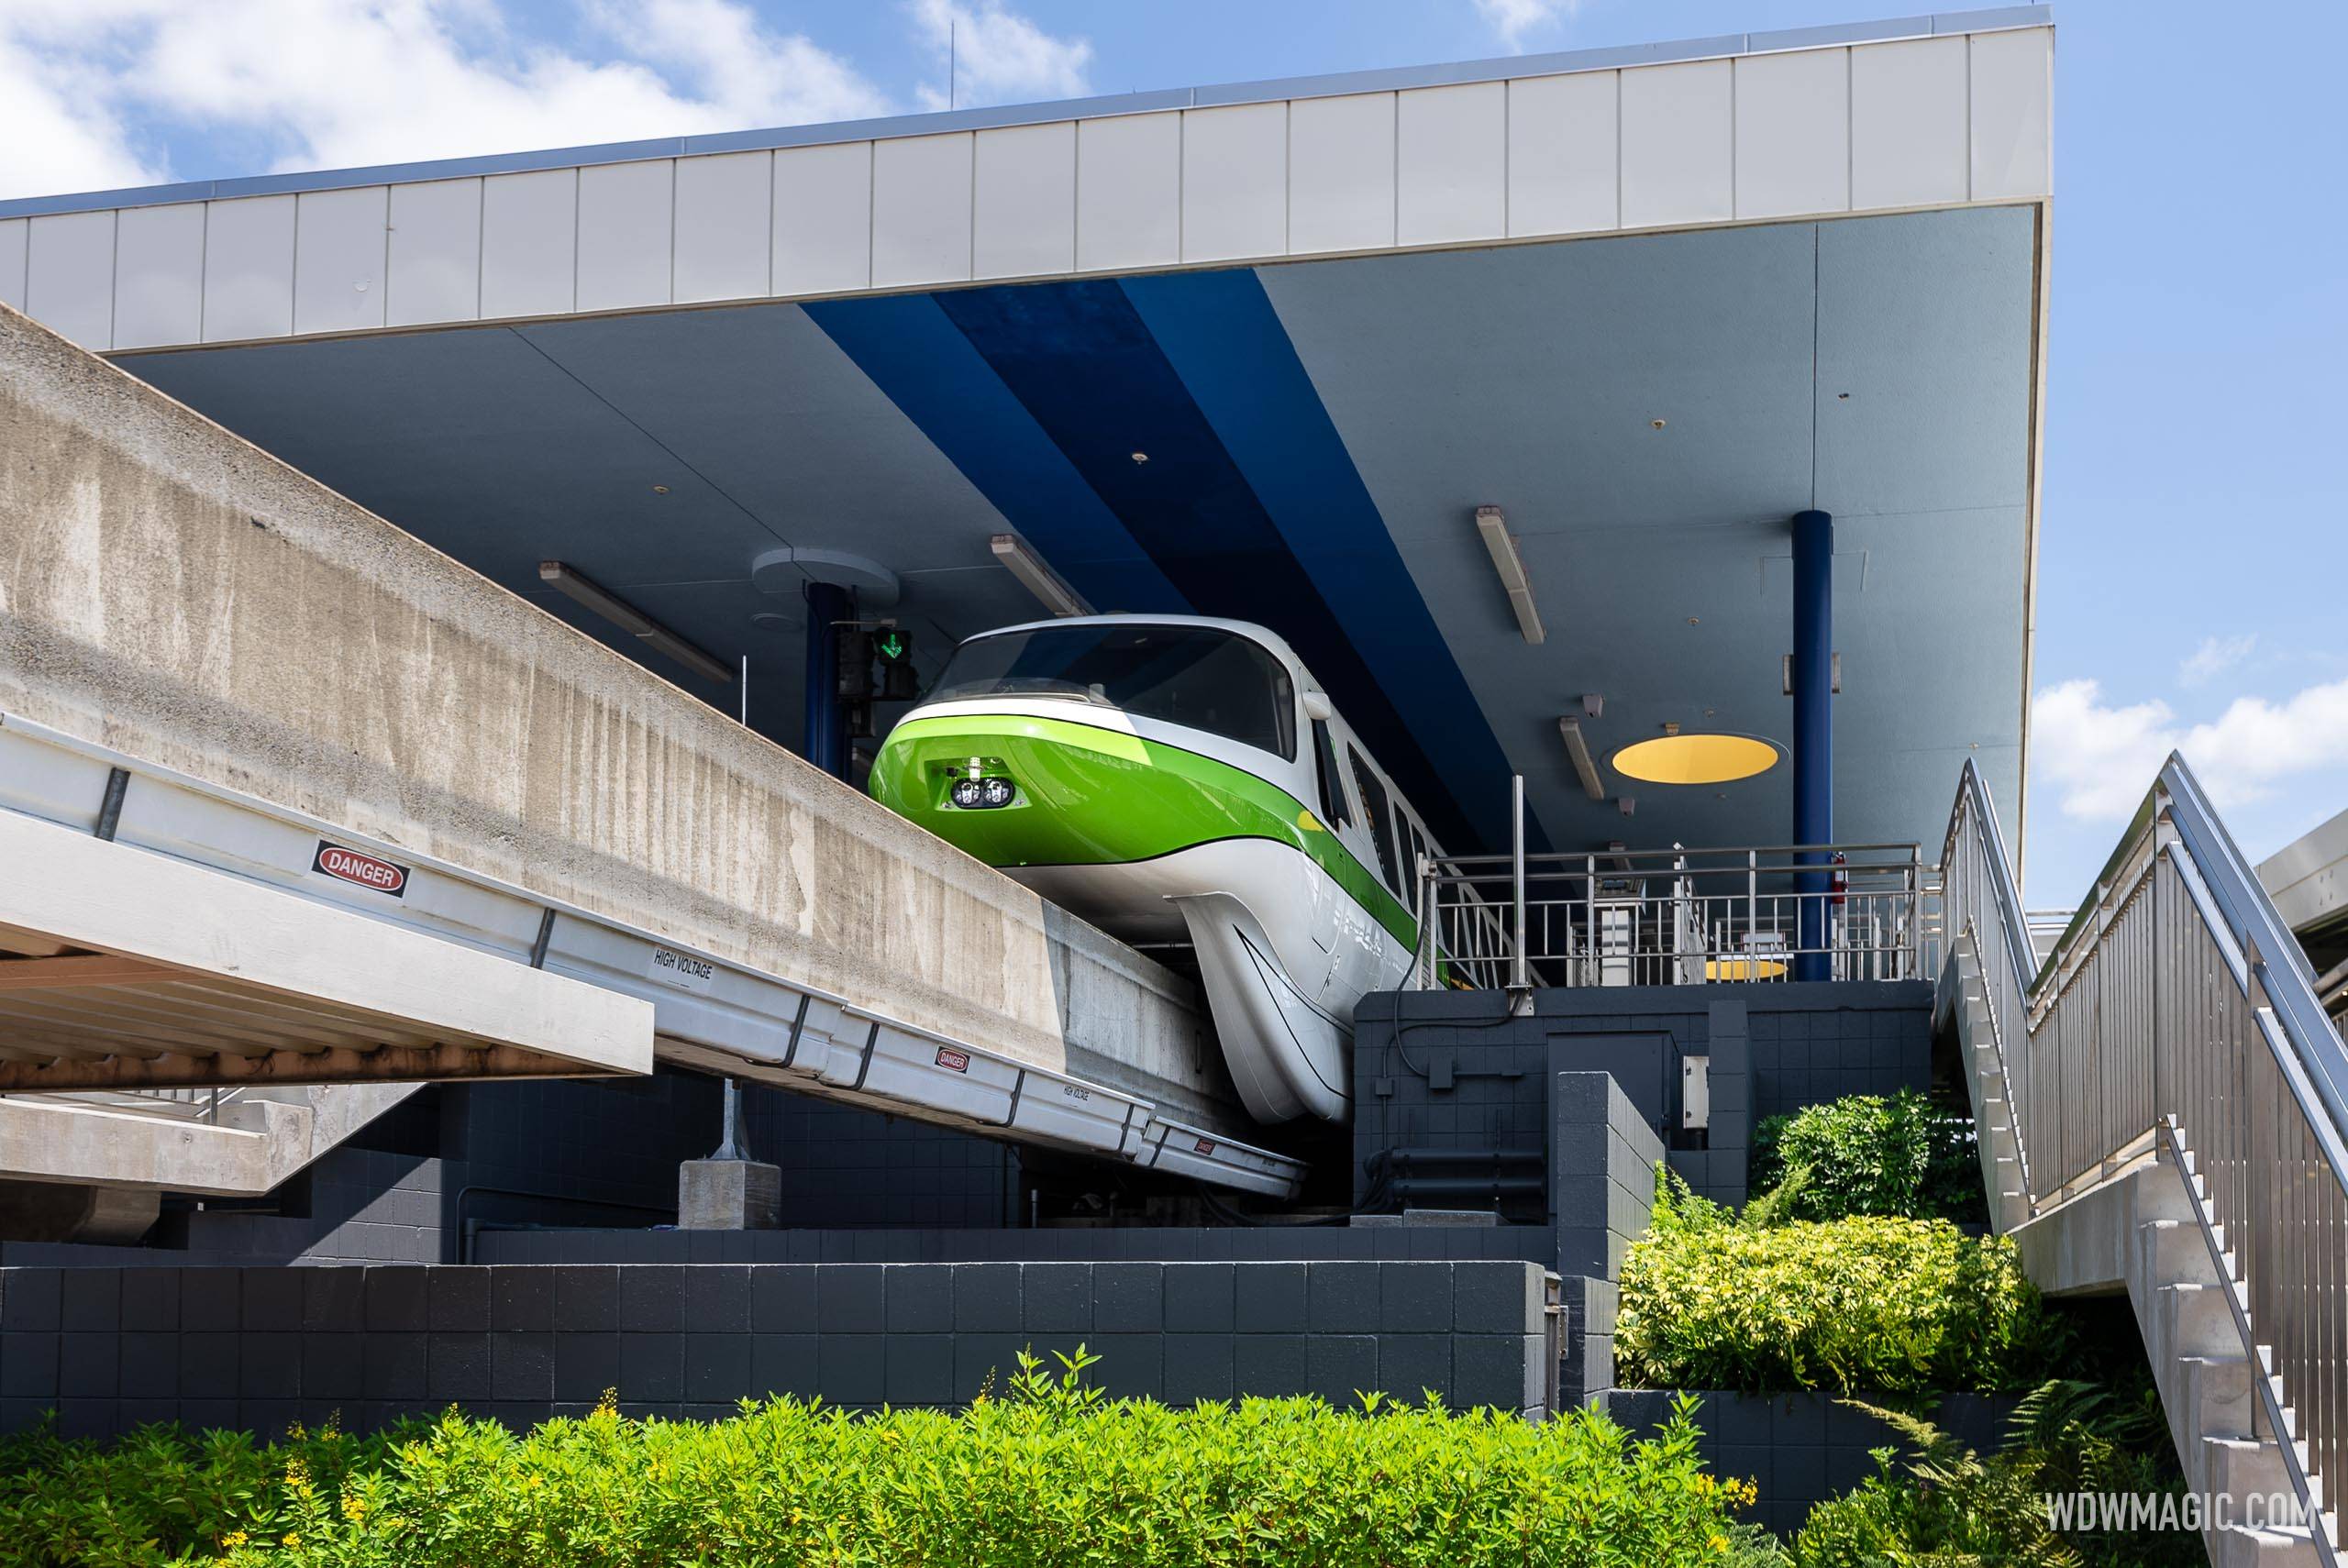 Repainted Monorail Green - August 2 2023